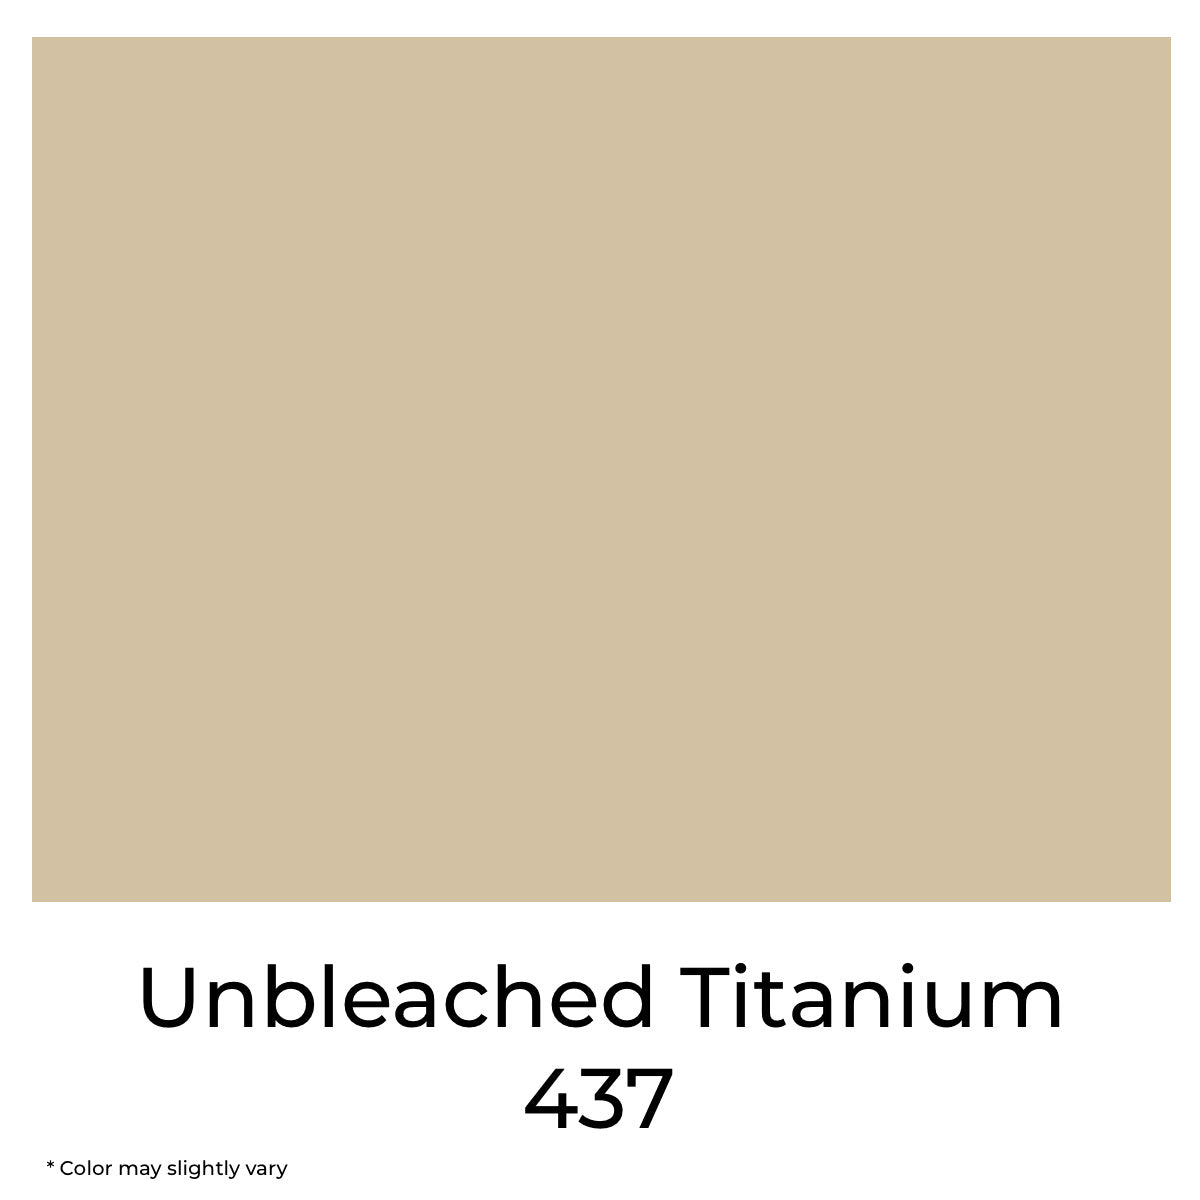 Camel Acrylic Color 437 Unbleached Titanium - 120ml from najmaonline Abu Dhabi, Dubai -UAE